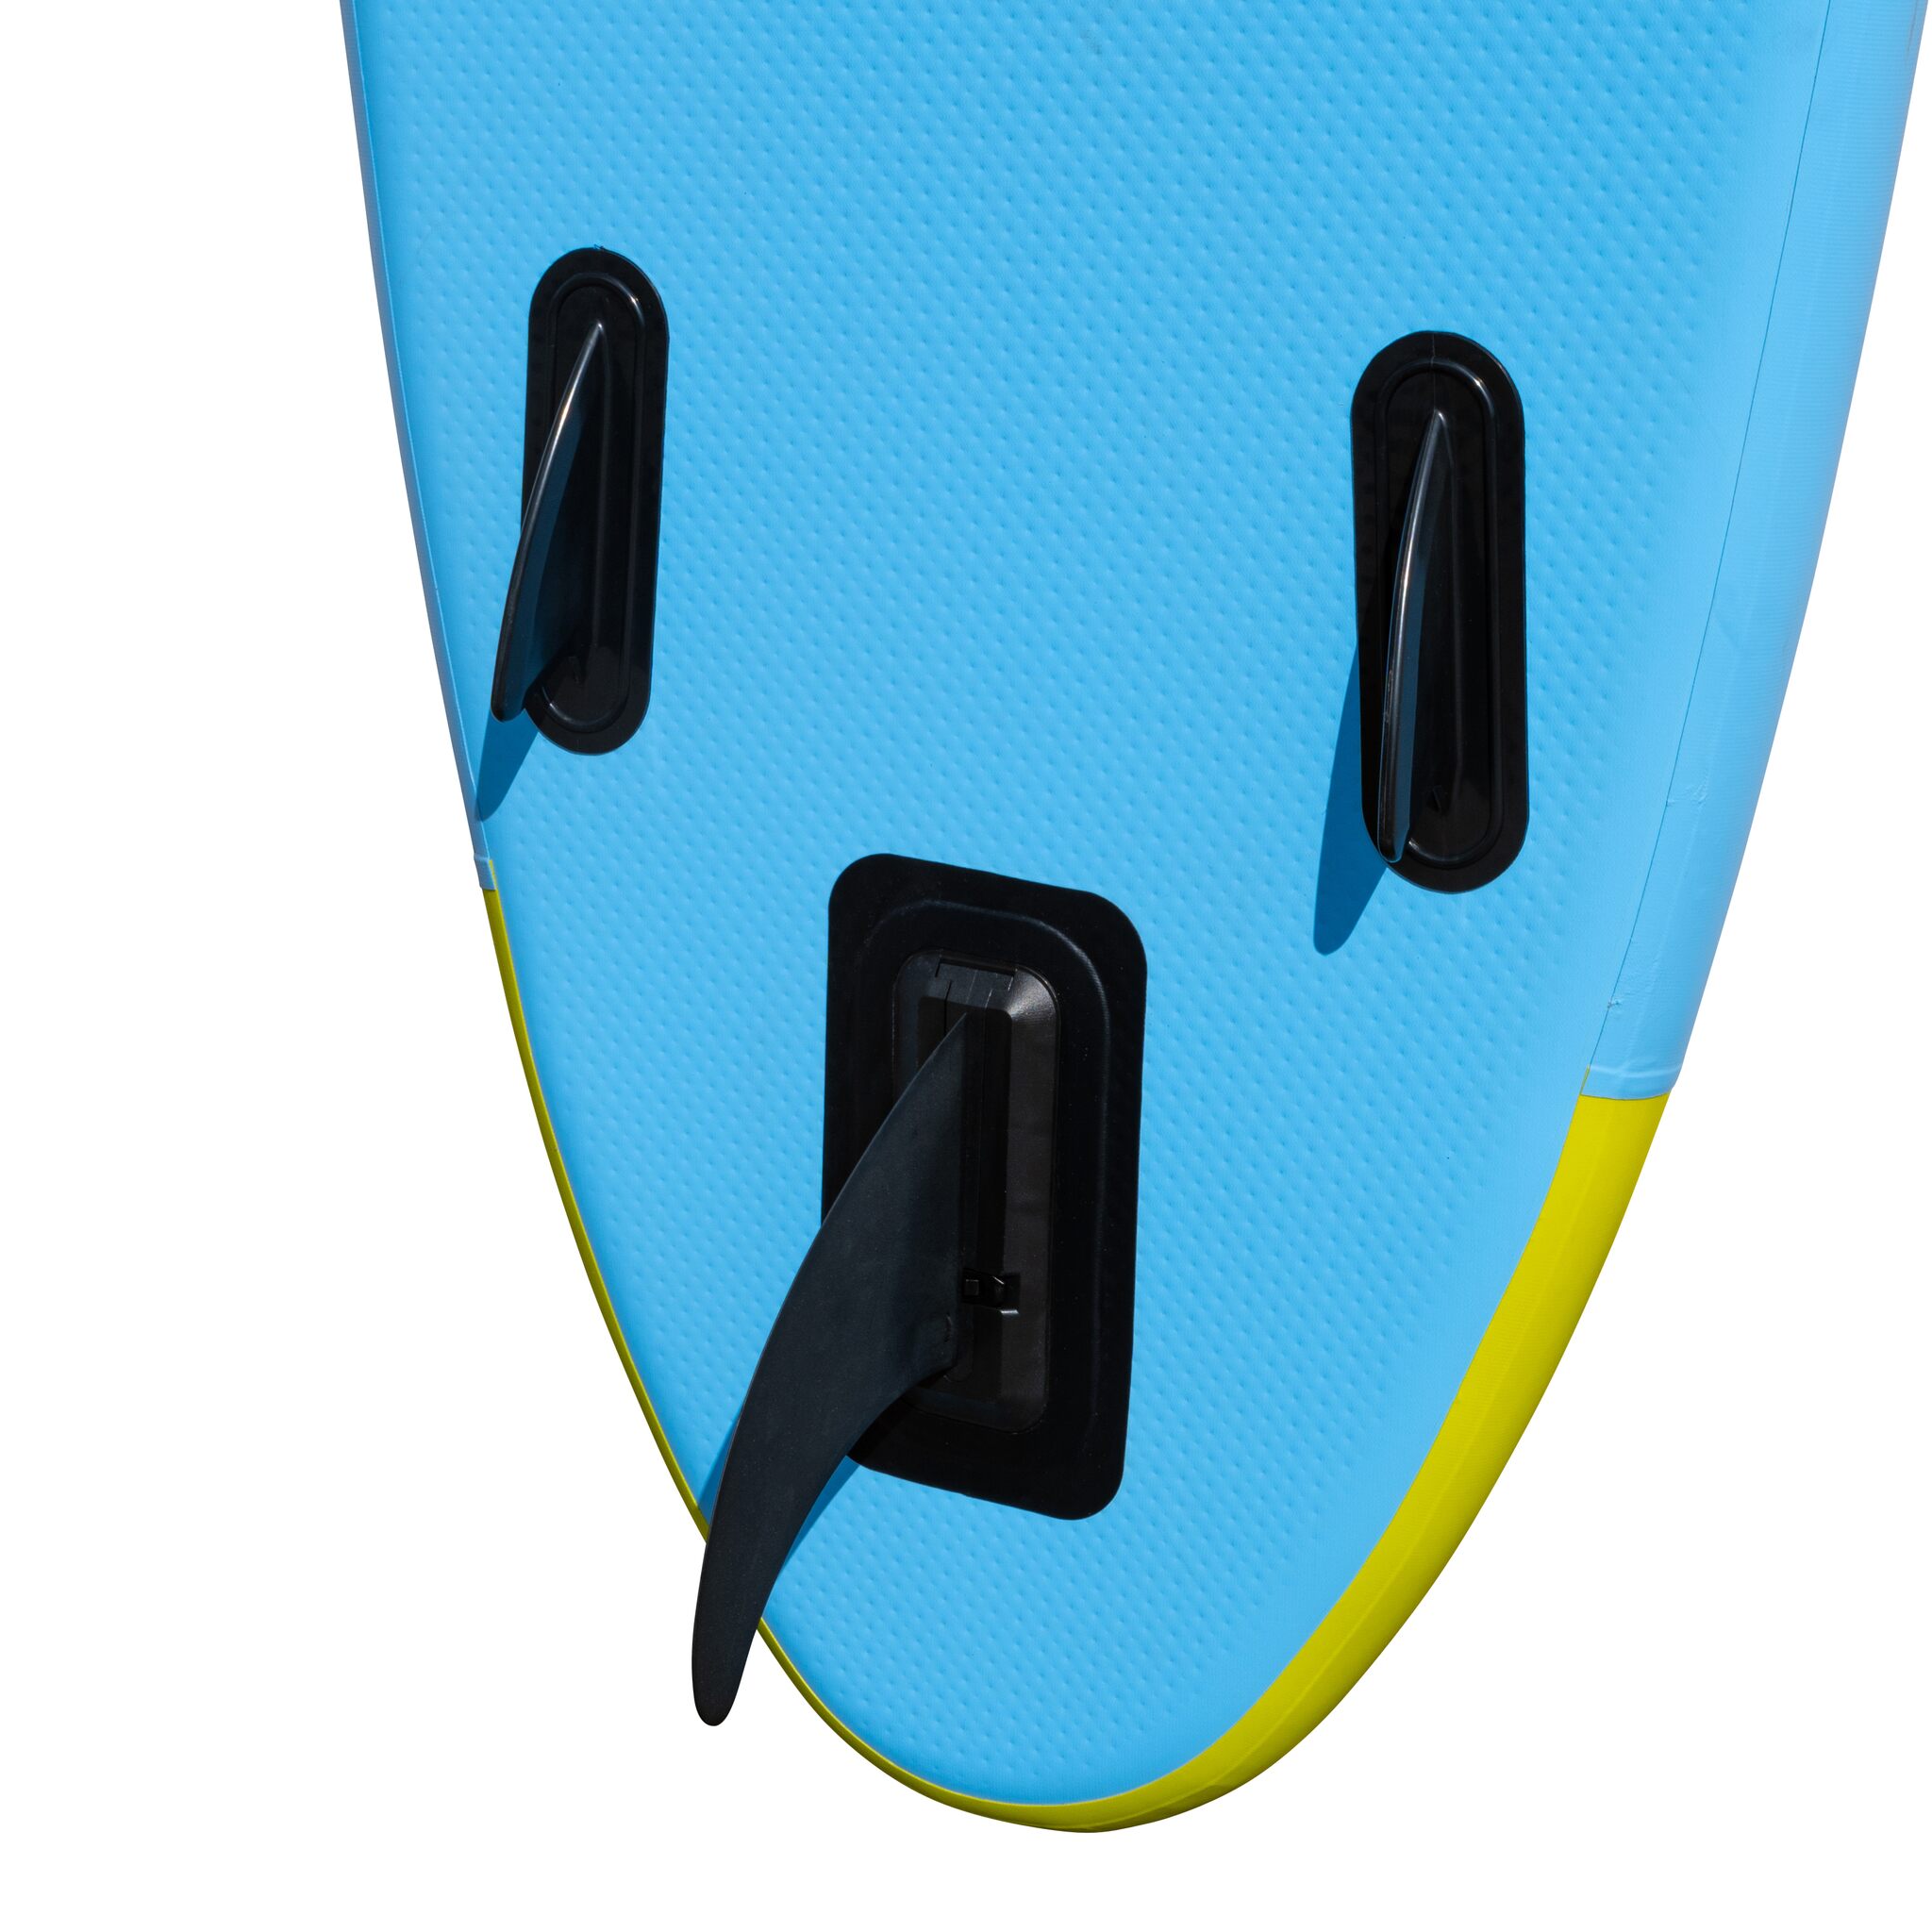 Ocean Fun SUP BlueKids - SUP Set incl. backpack, paddle and air pump